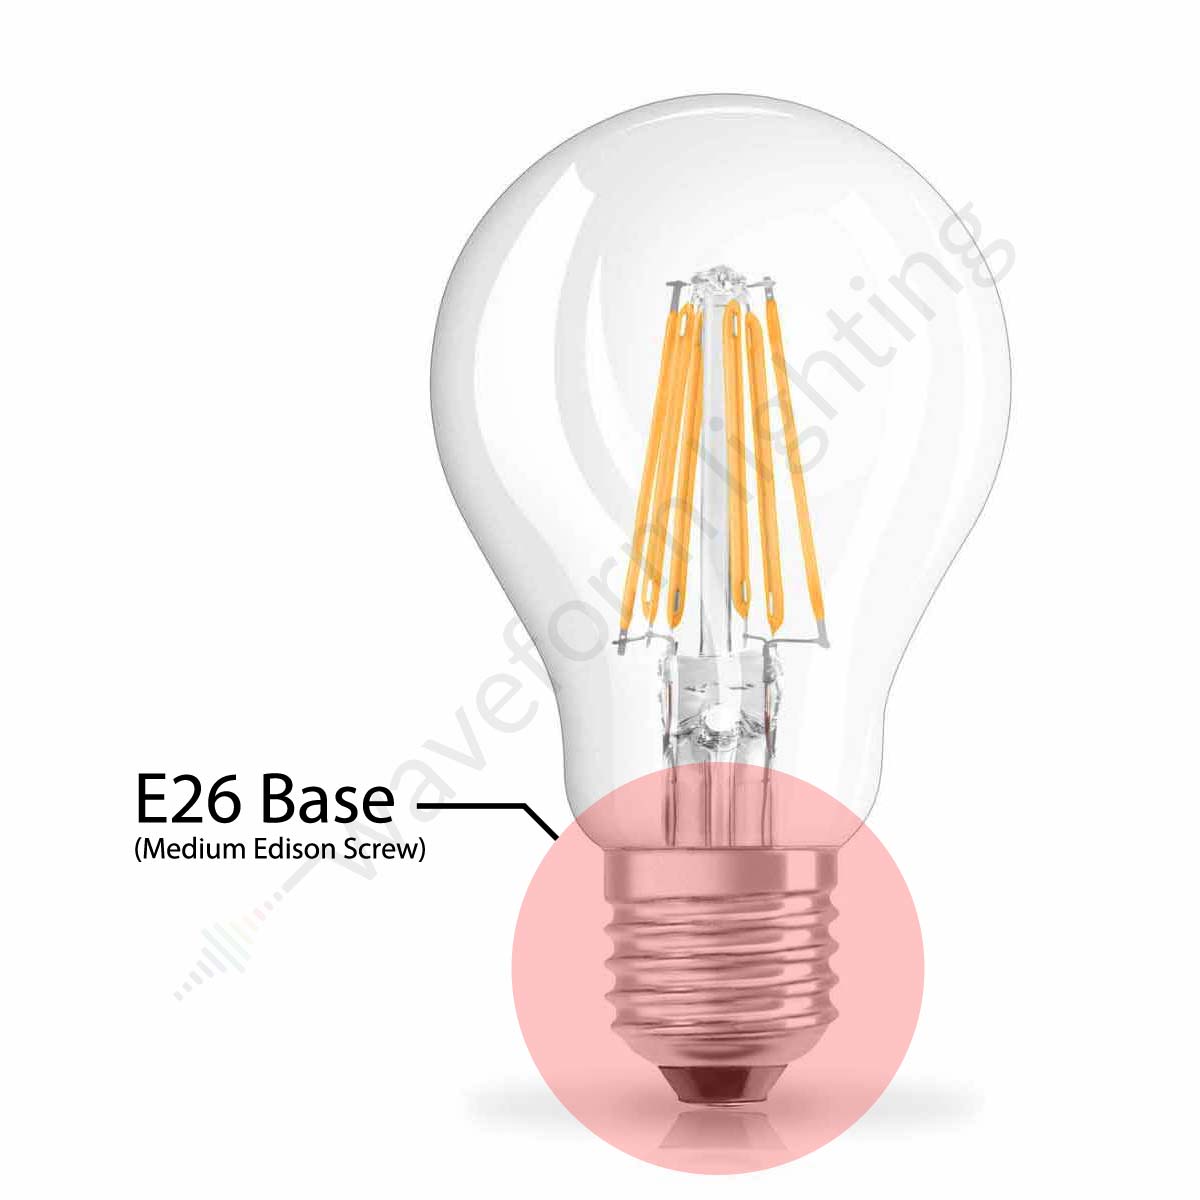 E26 E27 light bulb base to wire converter Make your own adapter or light bulb 